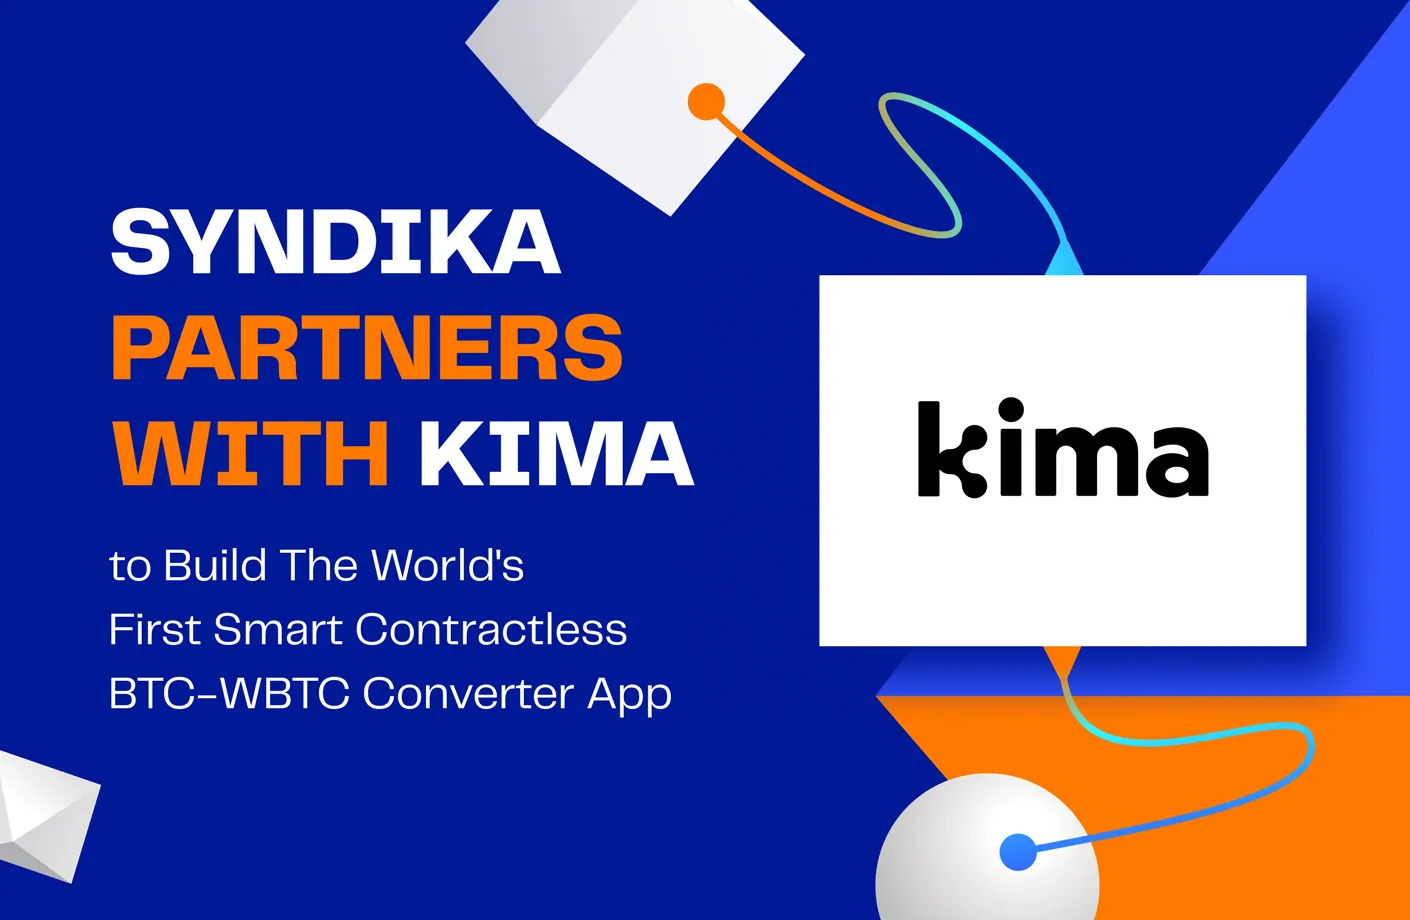 Syndika Partners with Kima to Build The World's First BTC-WBTC Converter App